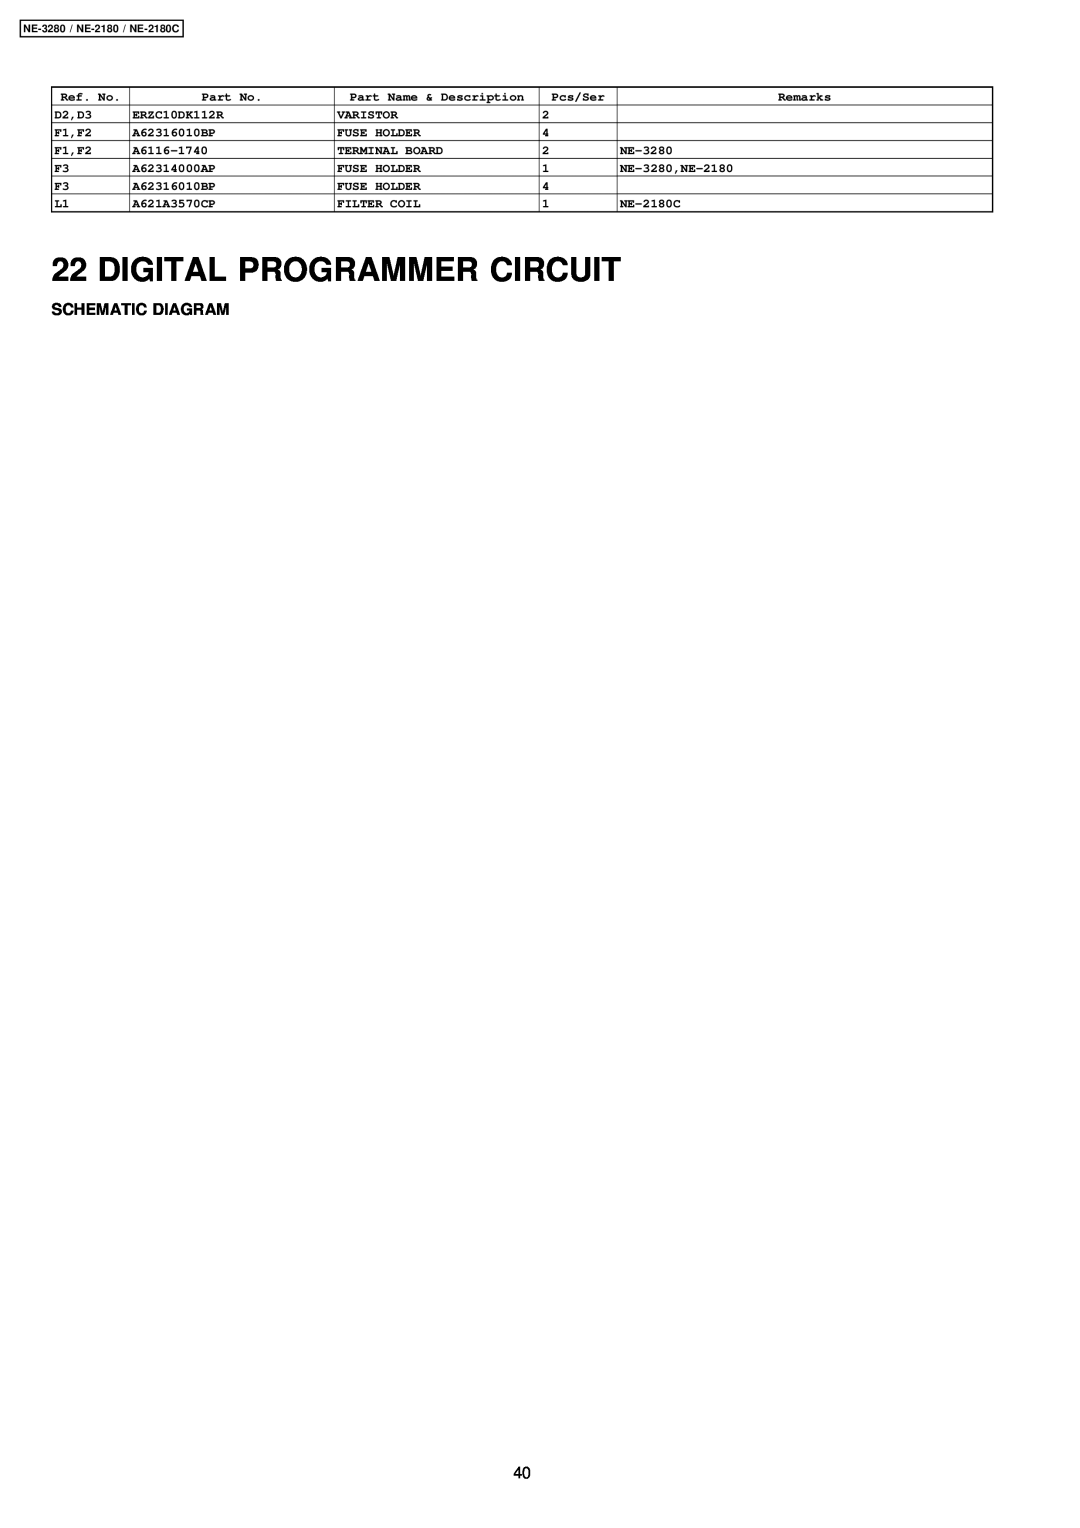 Panasonic NE-3280, NE-2180C manual Digital Programmer Circuit, Schematic Diagram 